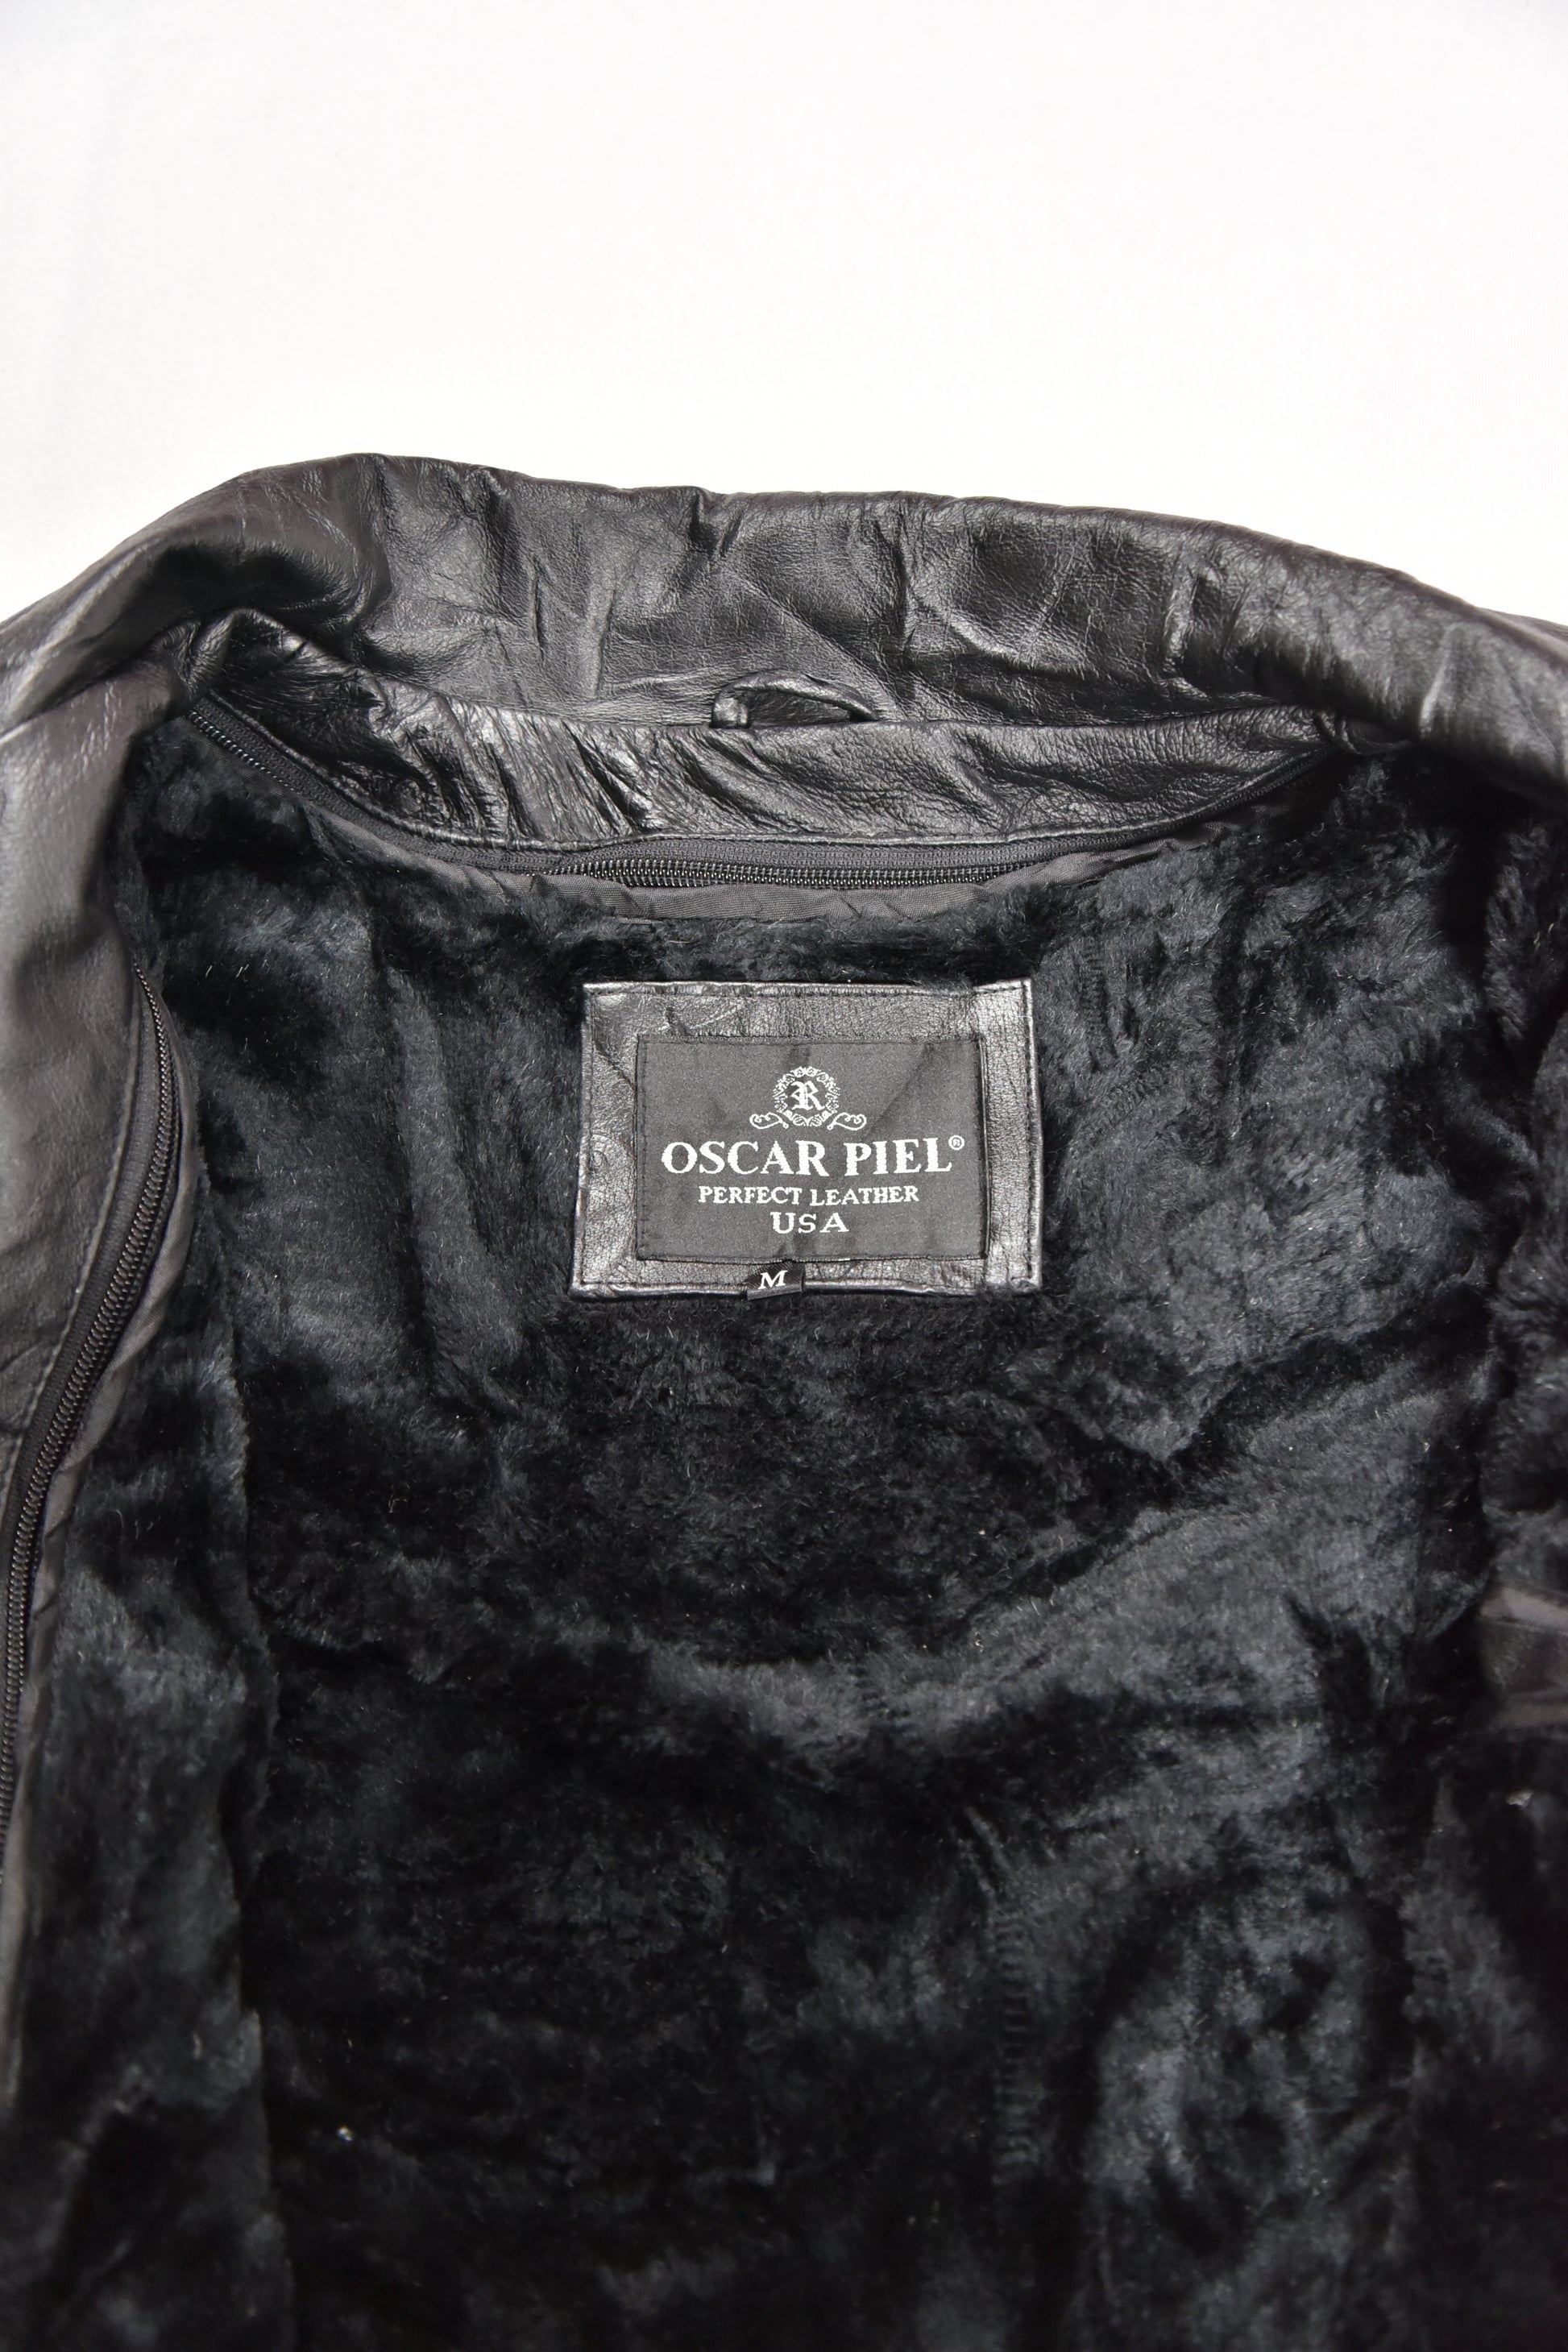 Oscar Piel Leather Jacket Price - RockStar Jacket